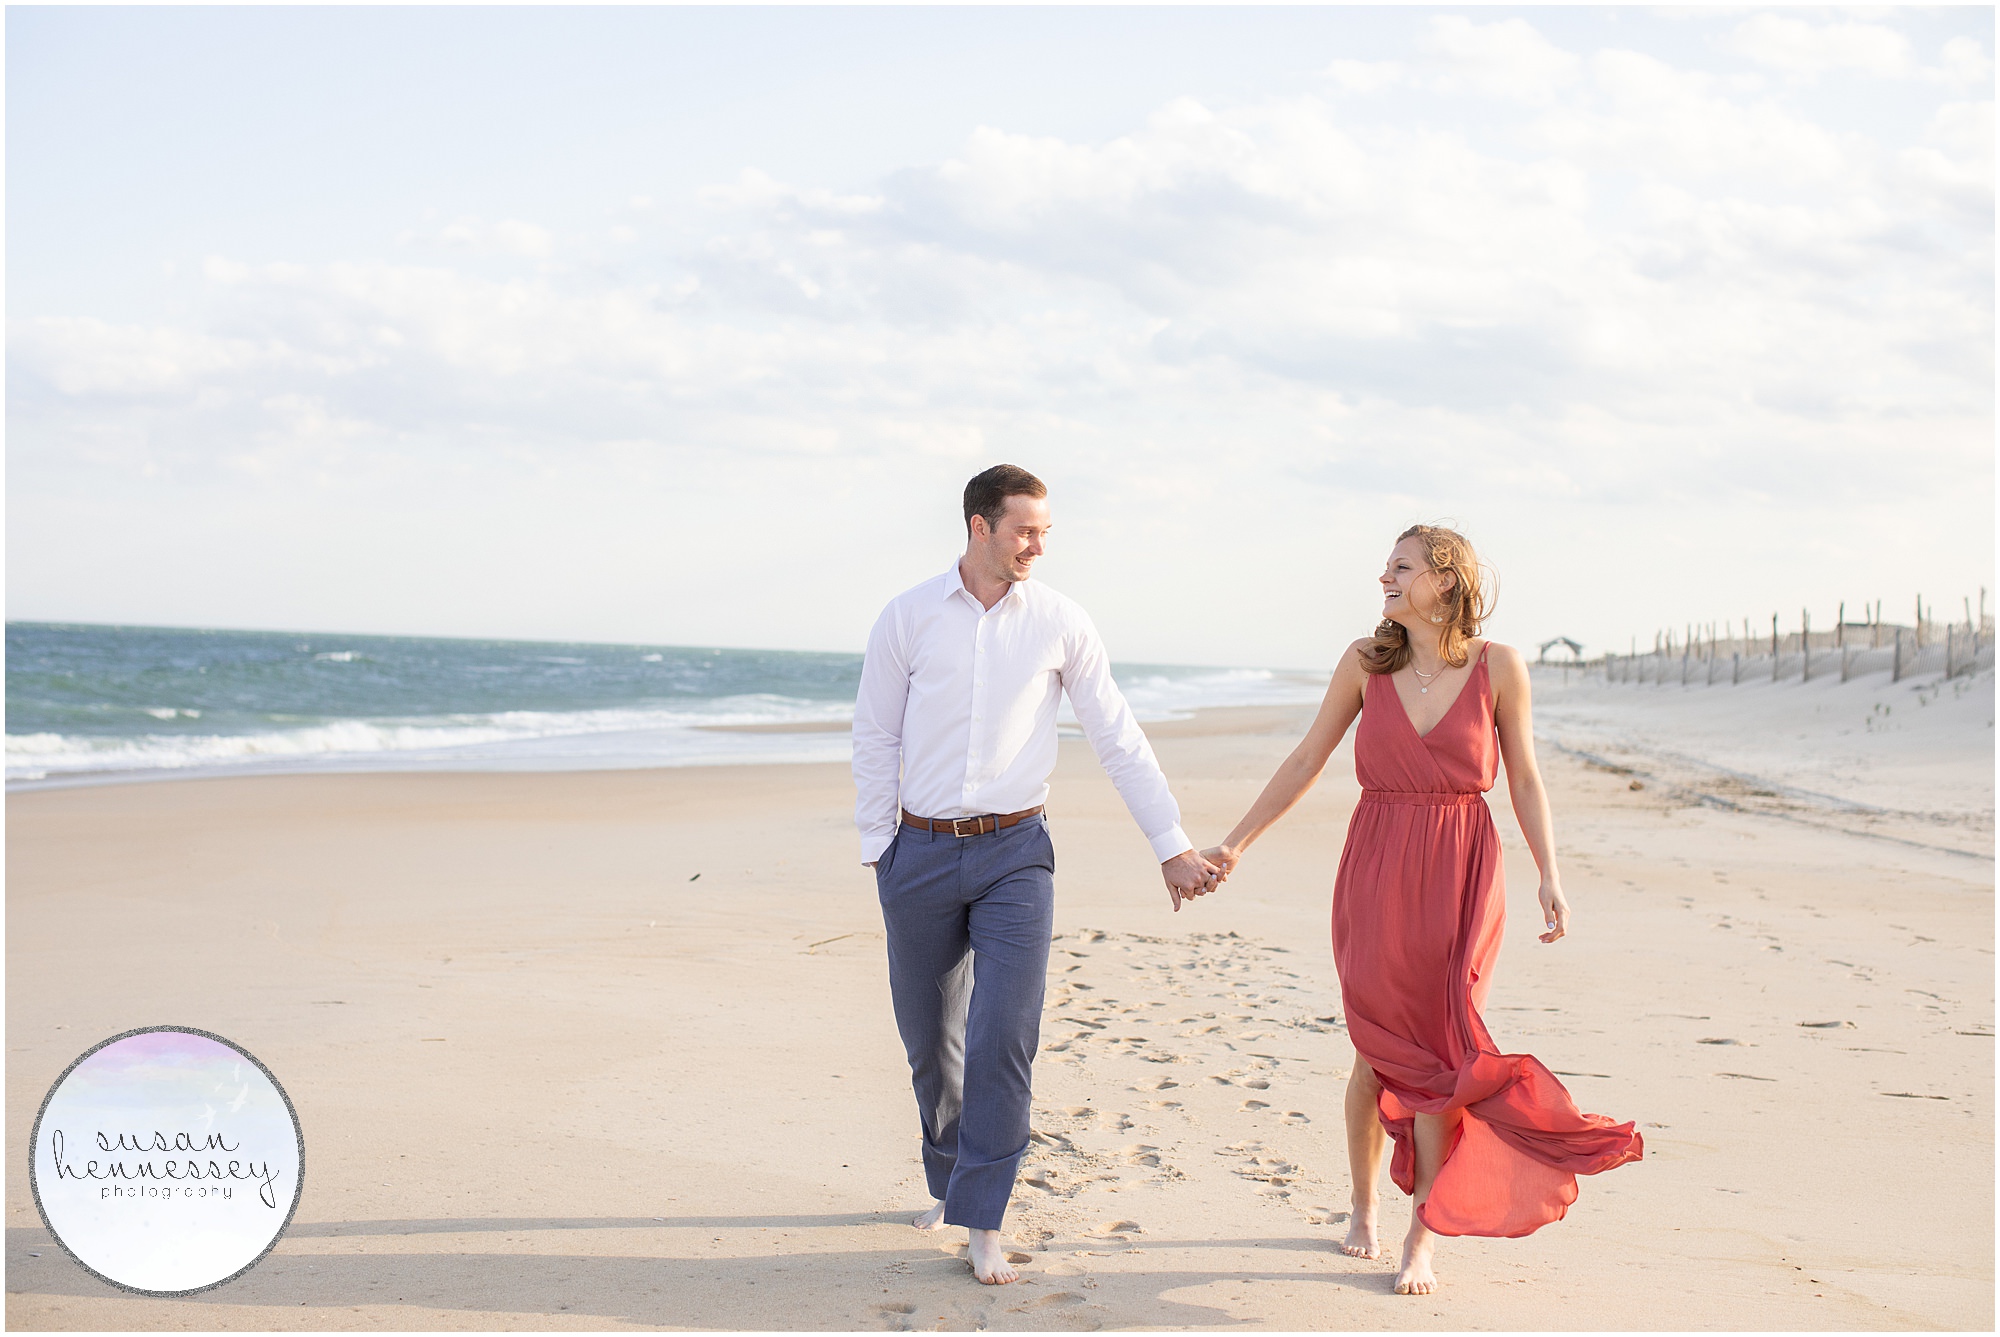 A couple walks on the beach holding hands.